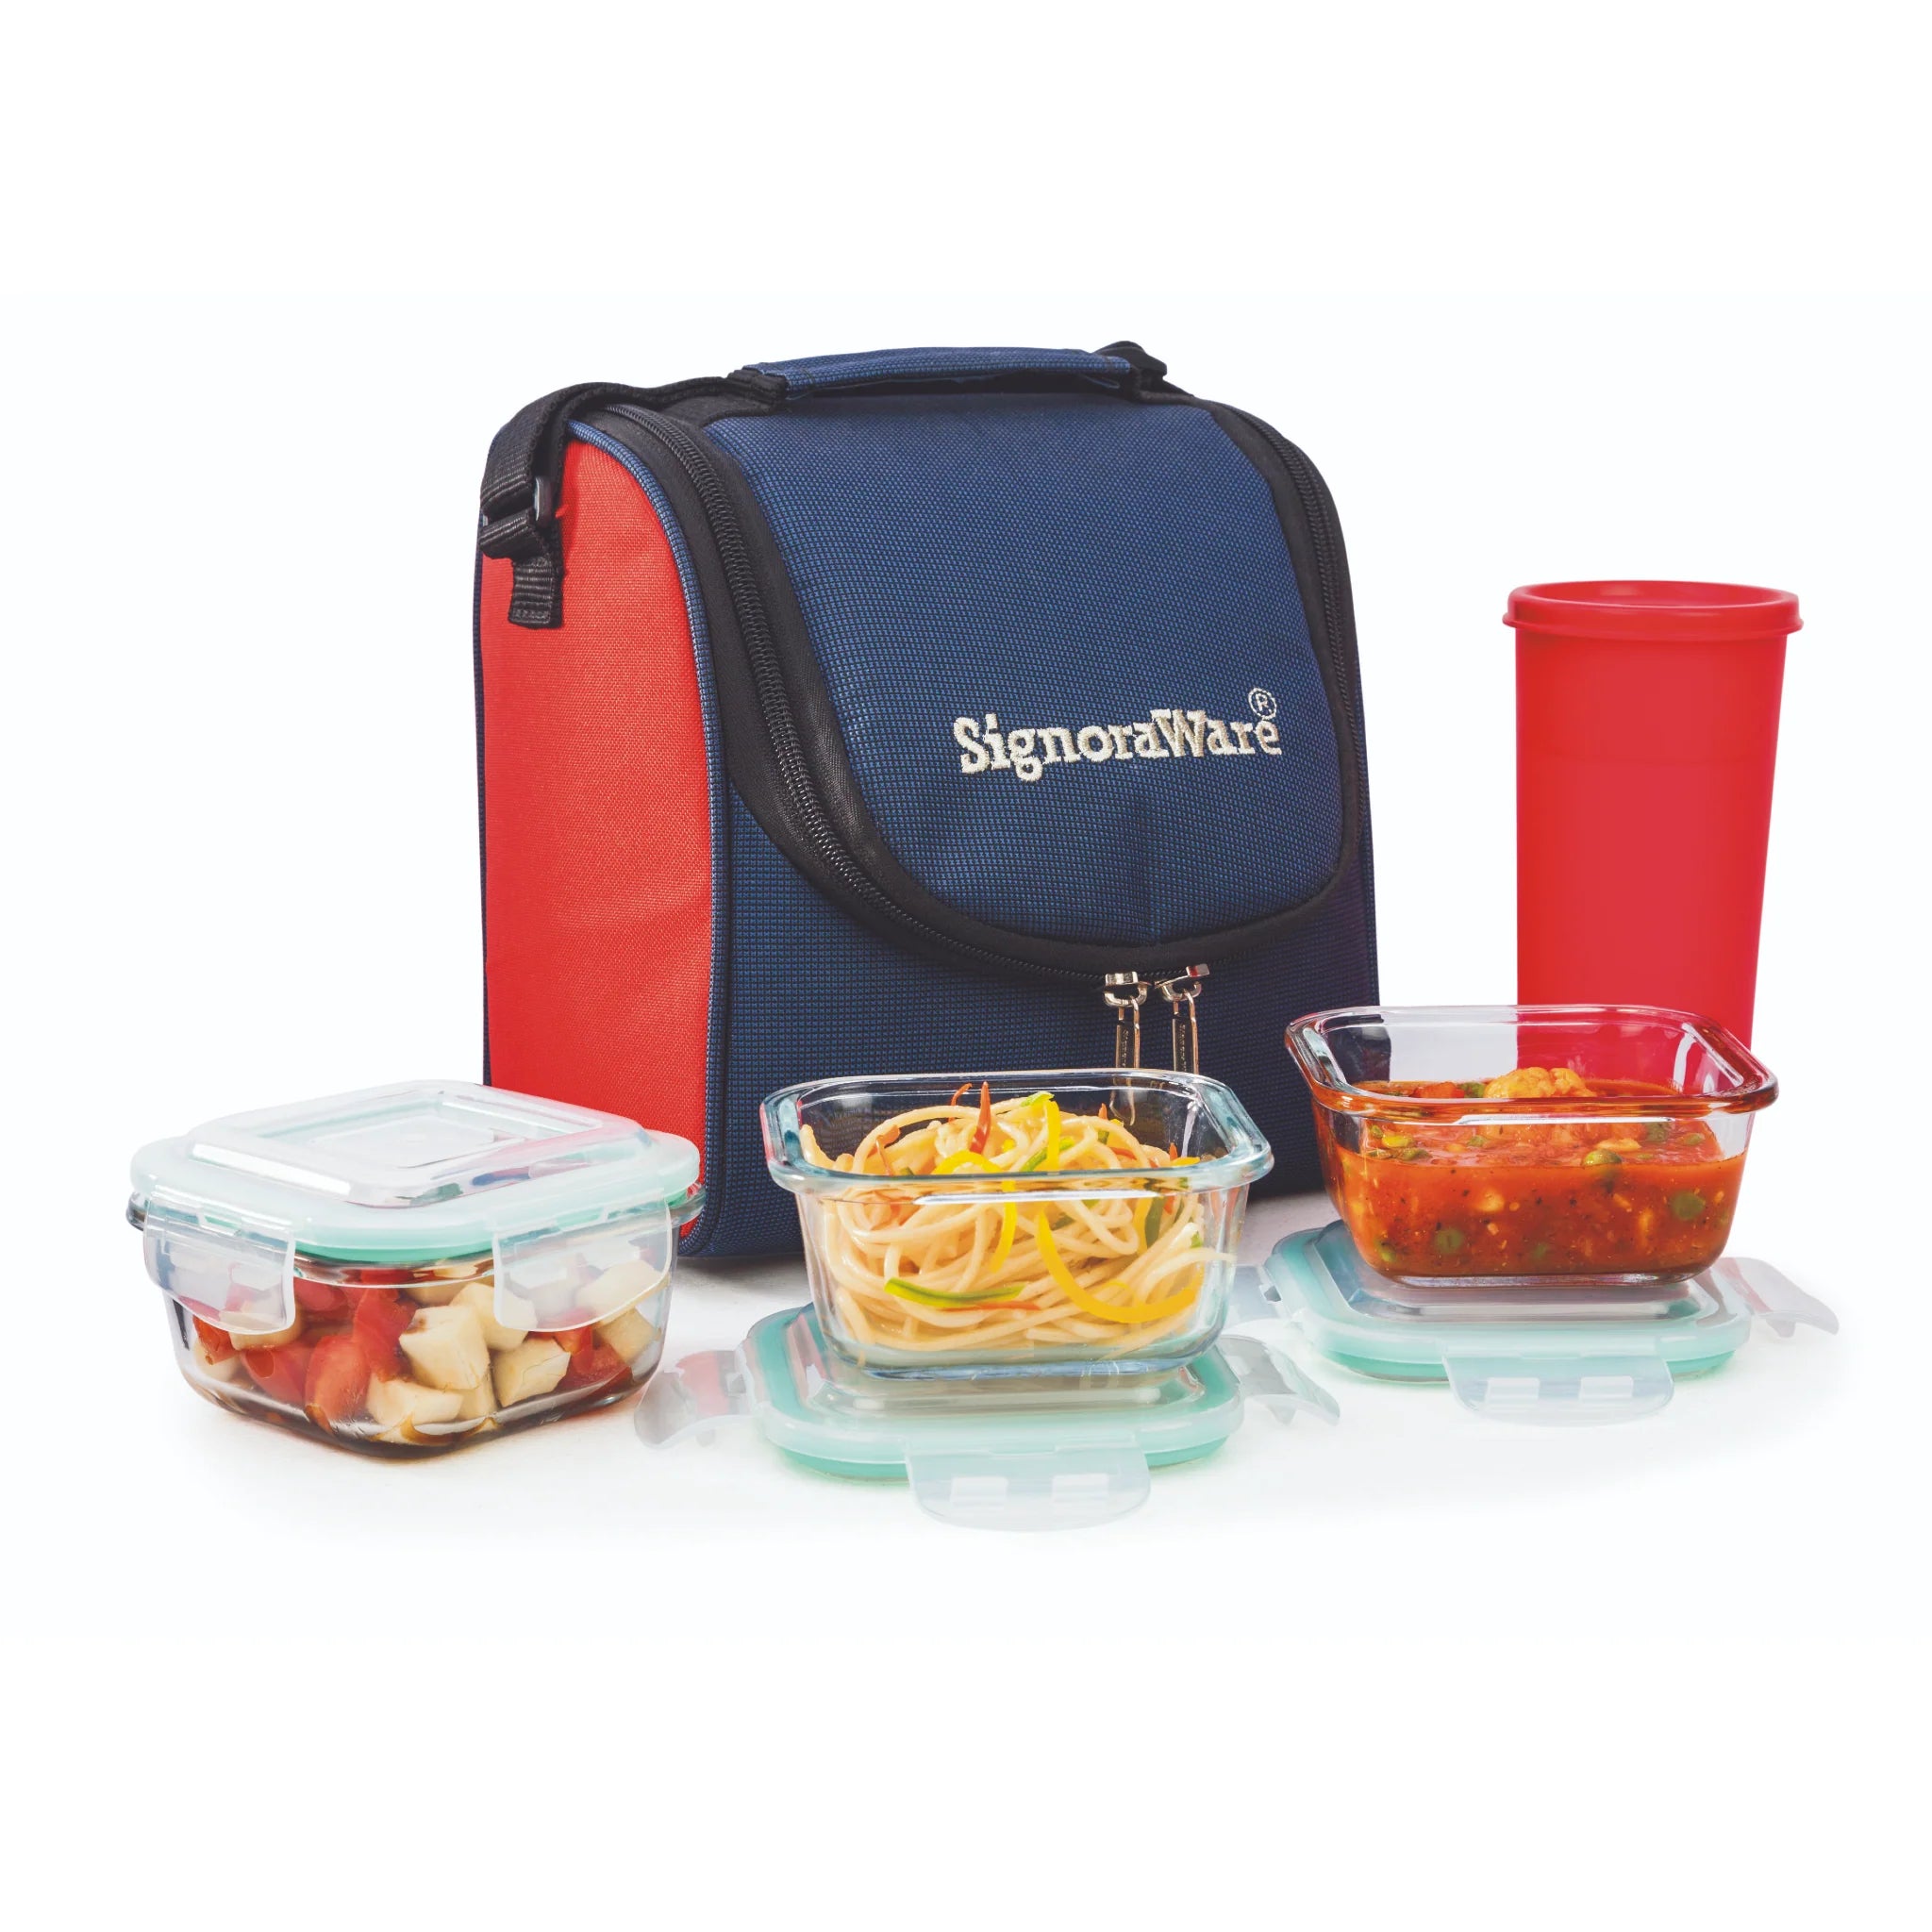 Signoraware Best Glass Lunch Box - 1503